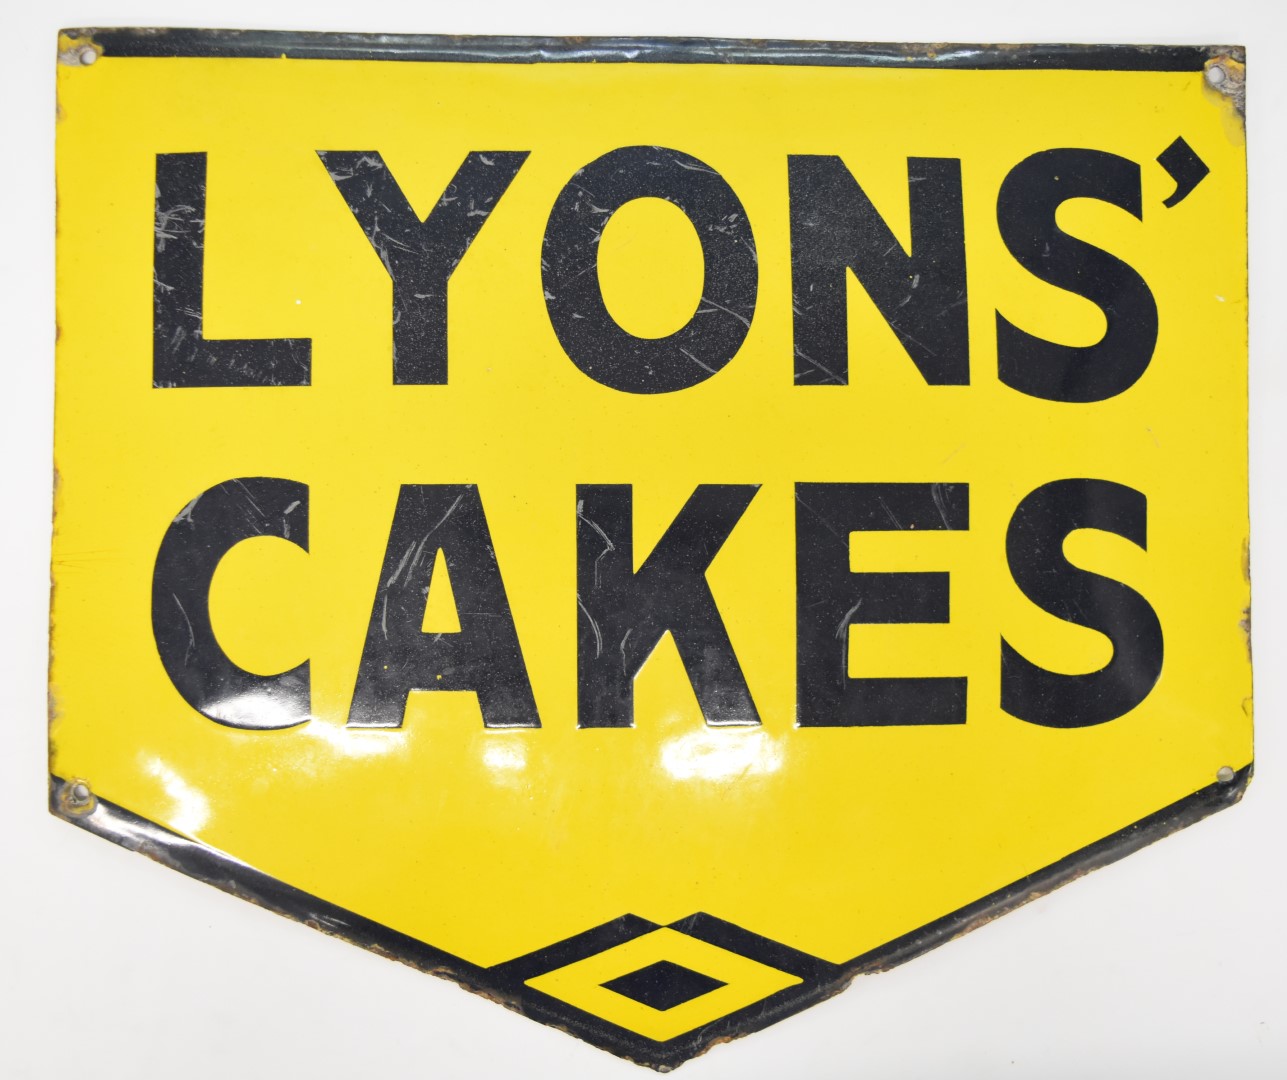 Lyons' Cakes enamel sign, 40 x 45cm